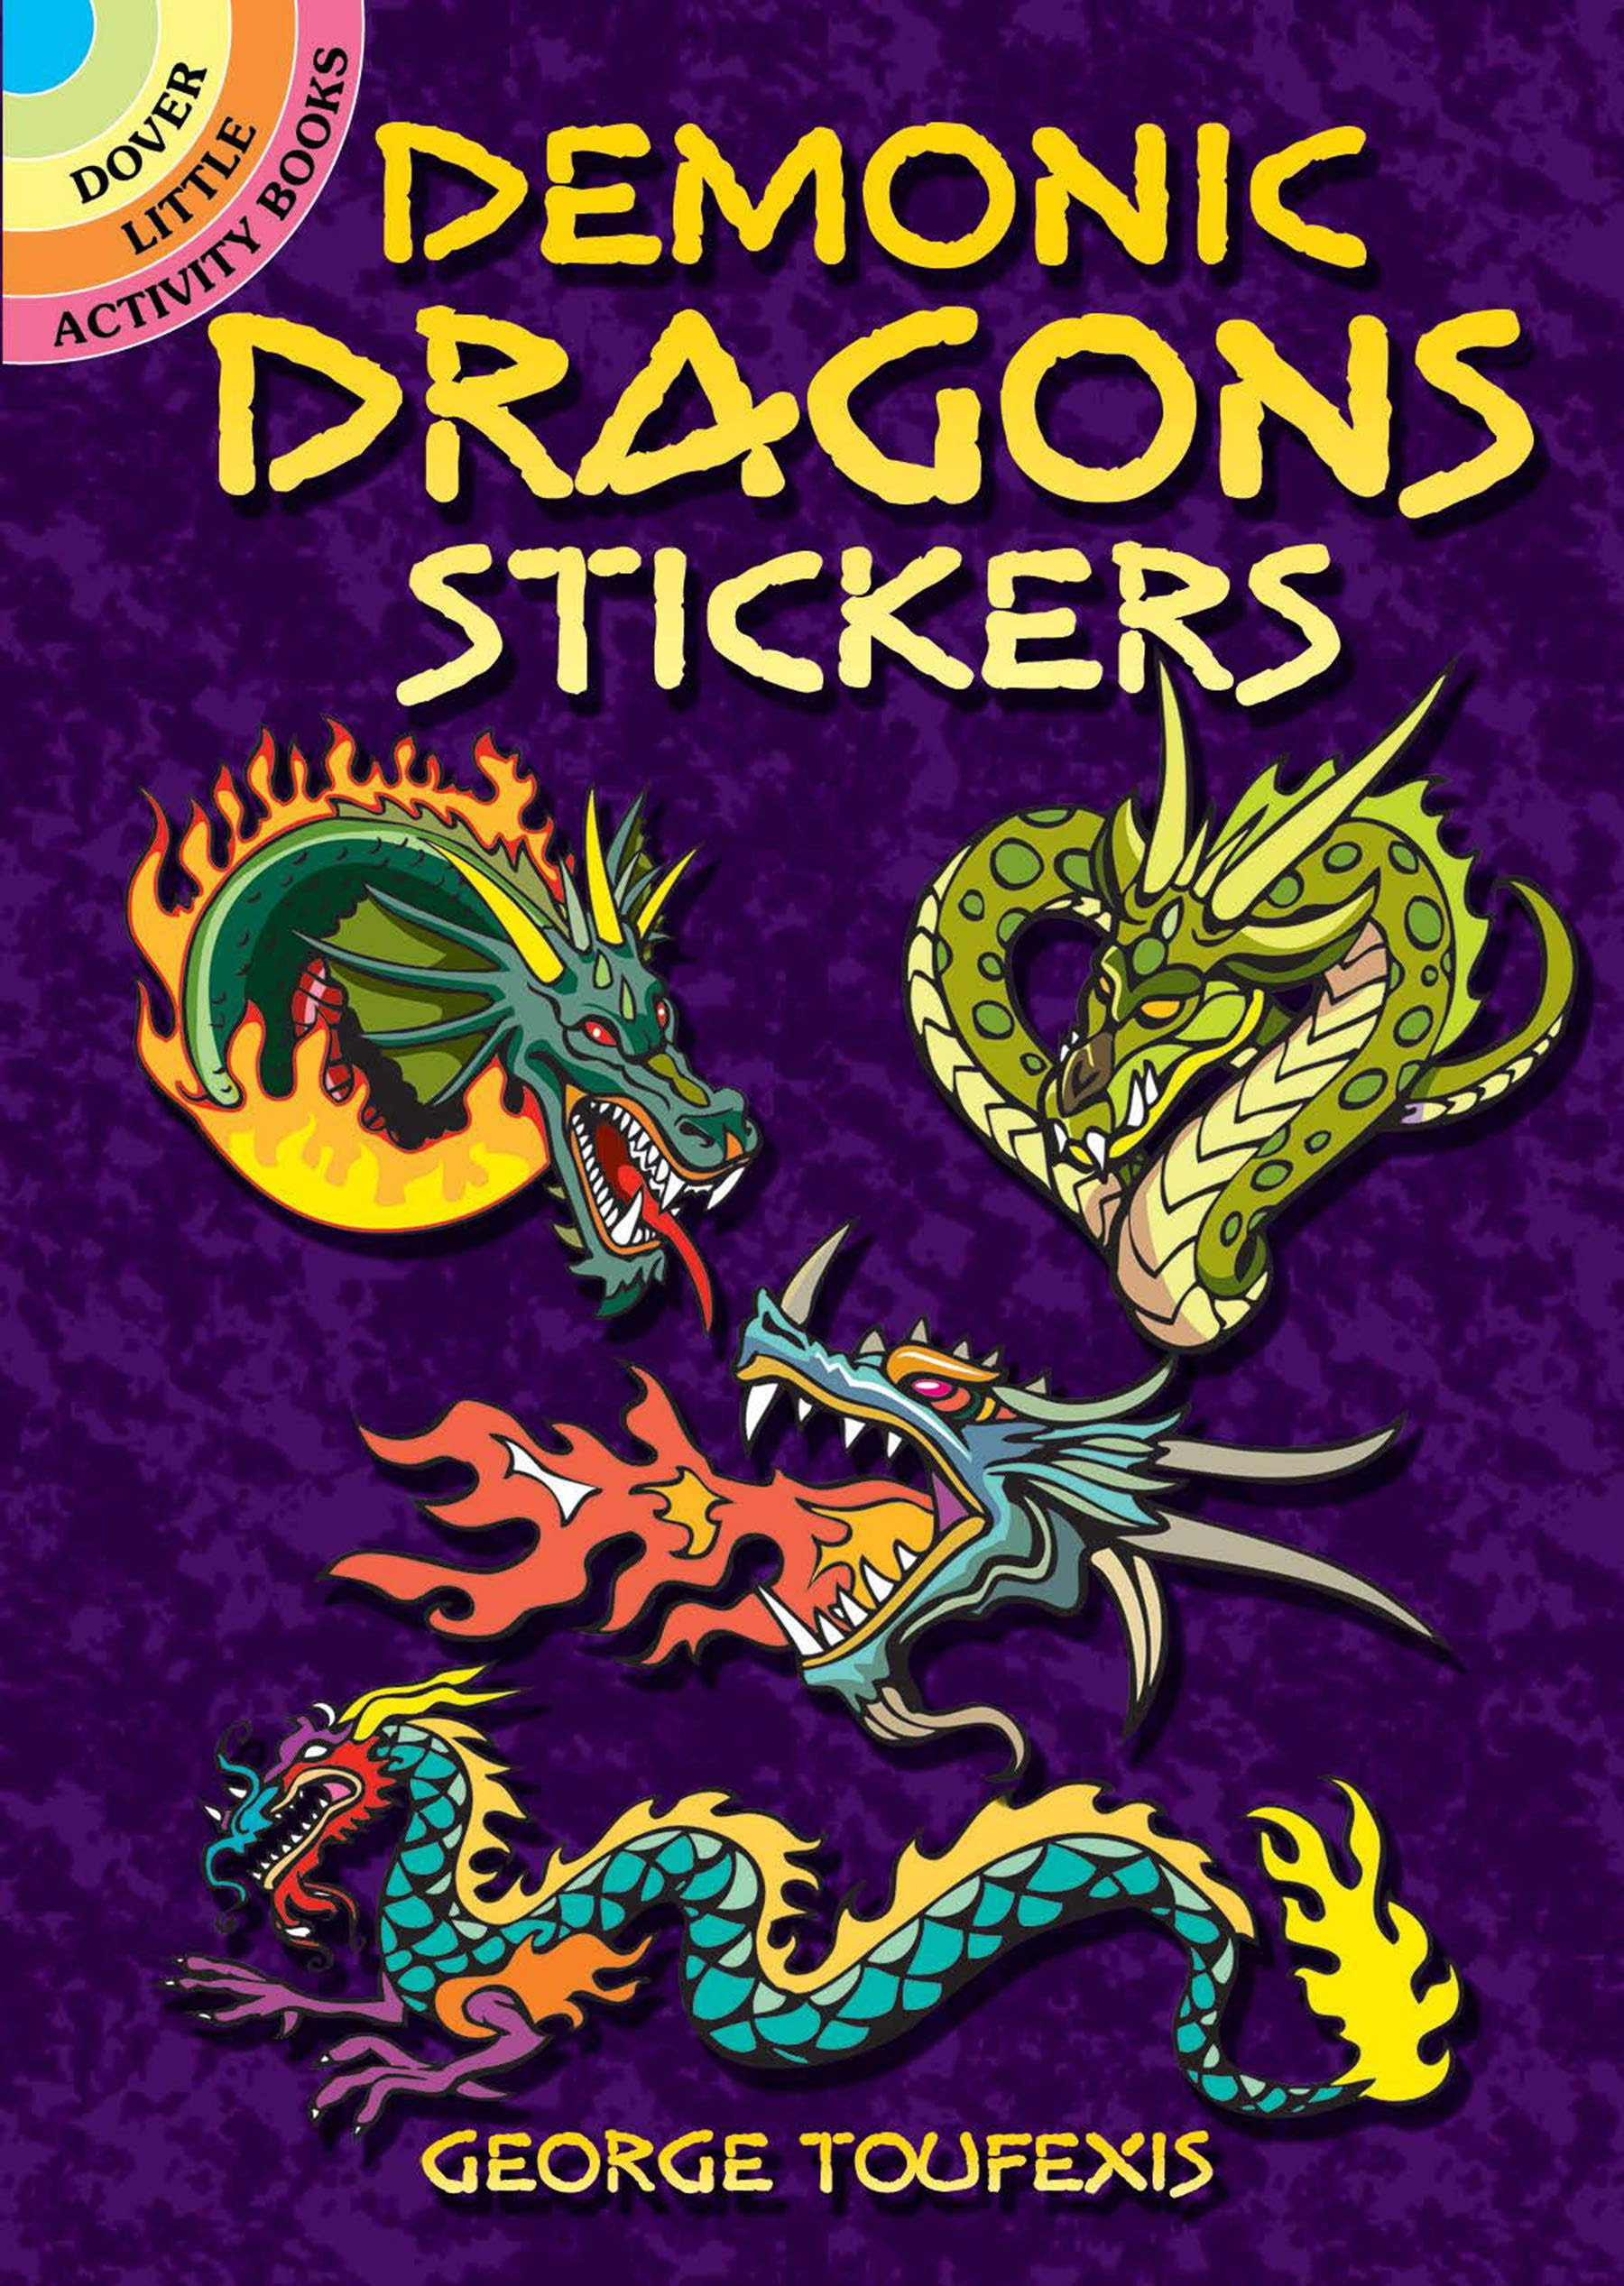 Demonic Dragons Stickers [Book]